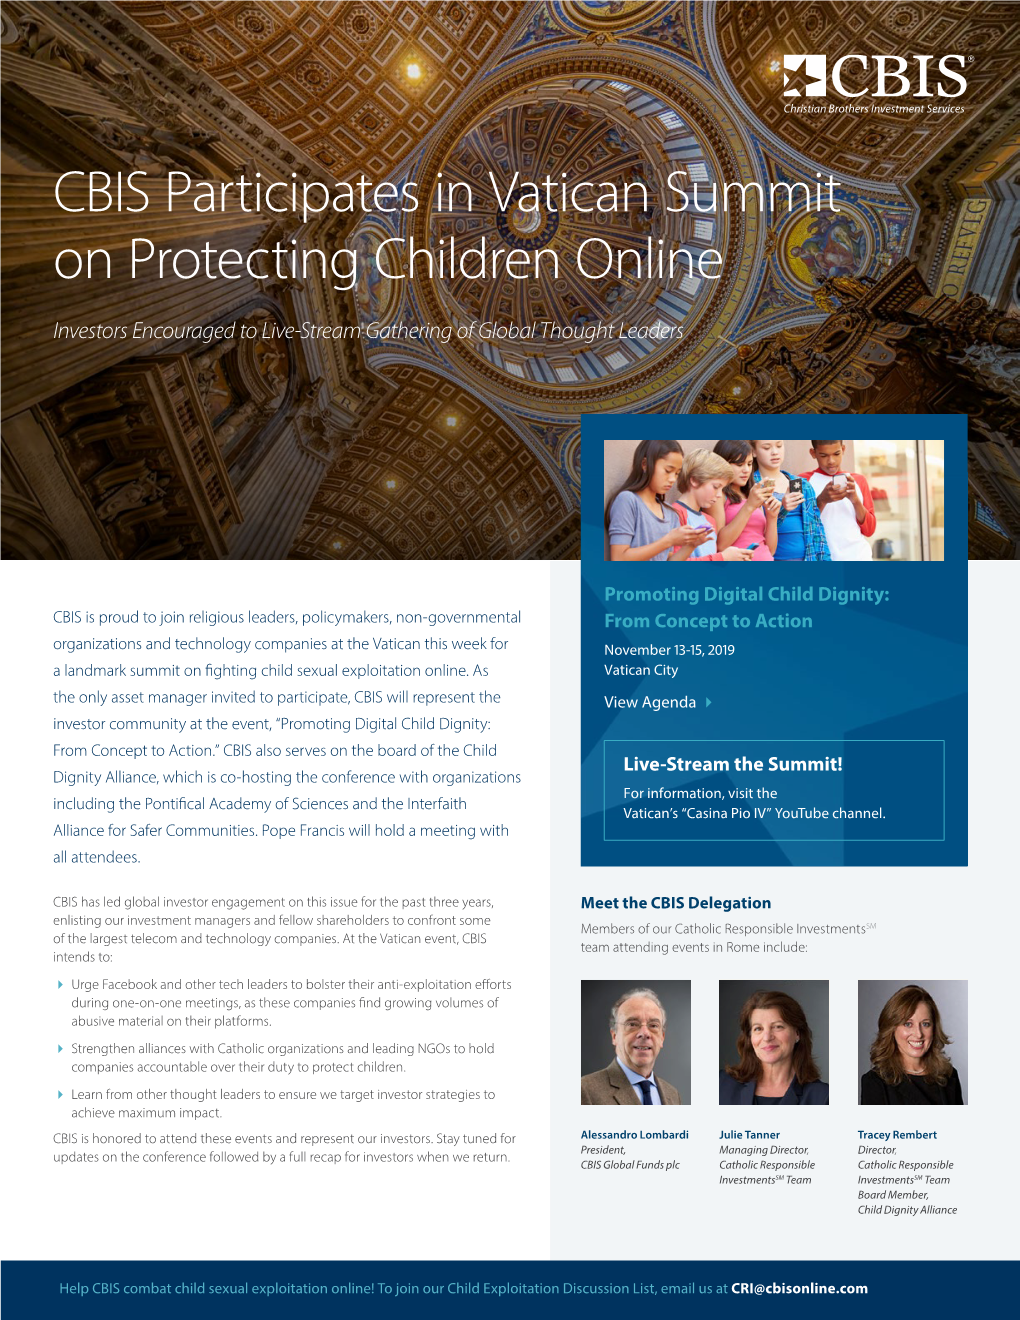 CBIS Participates in Vatican Summit on Protecting Children Online